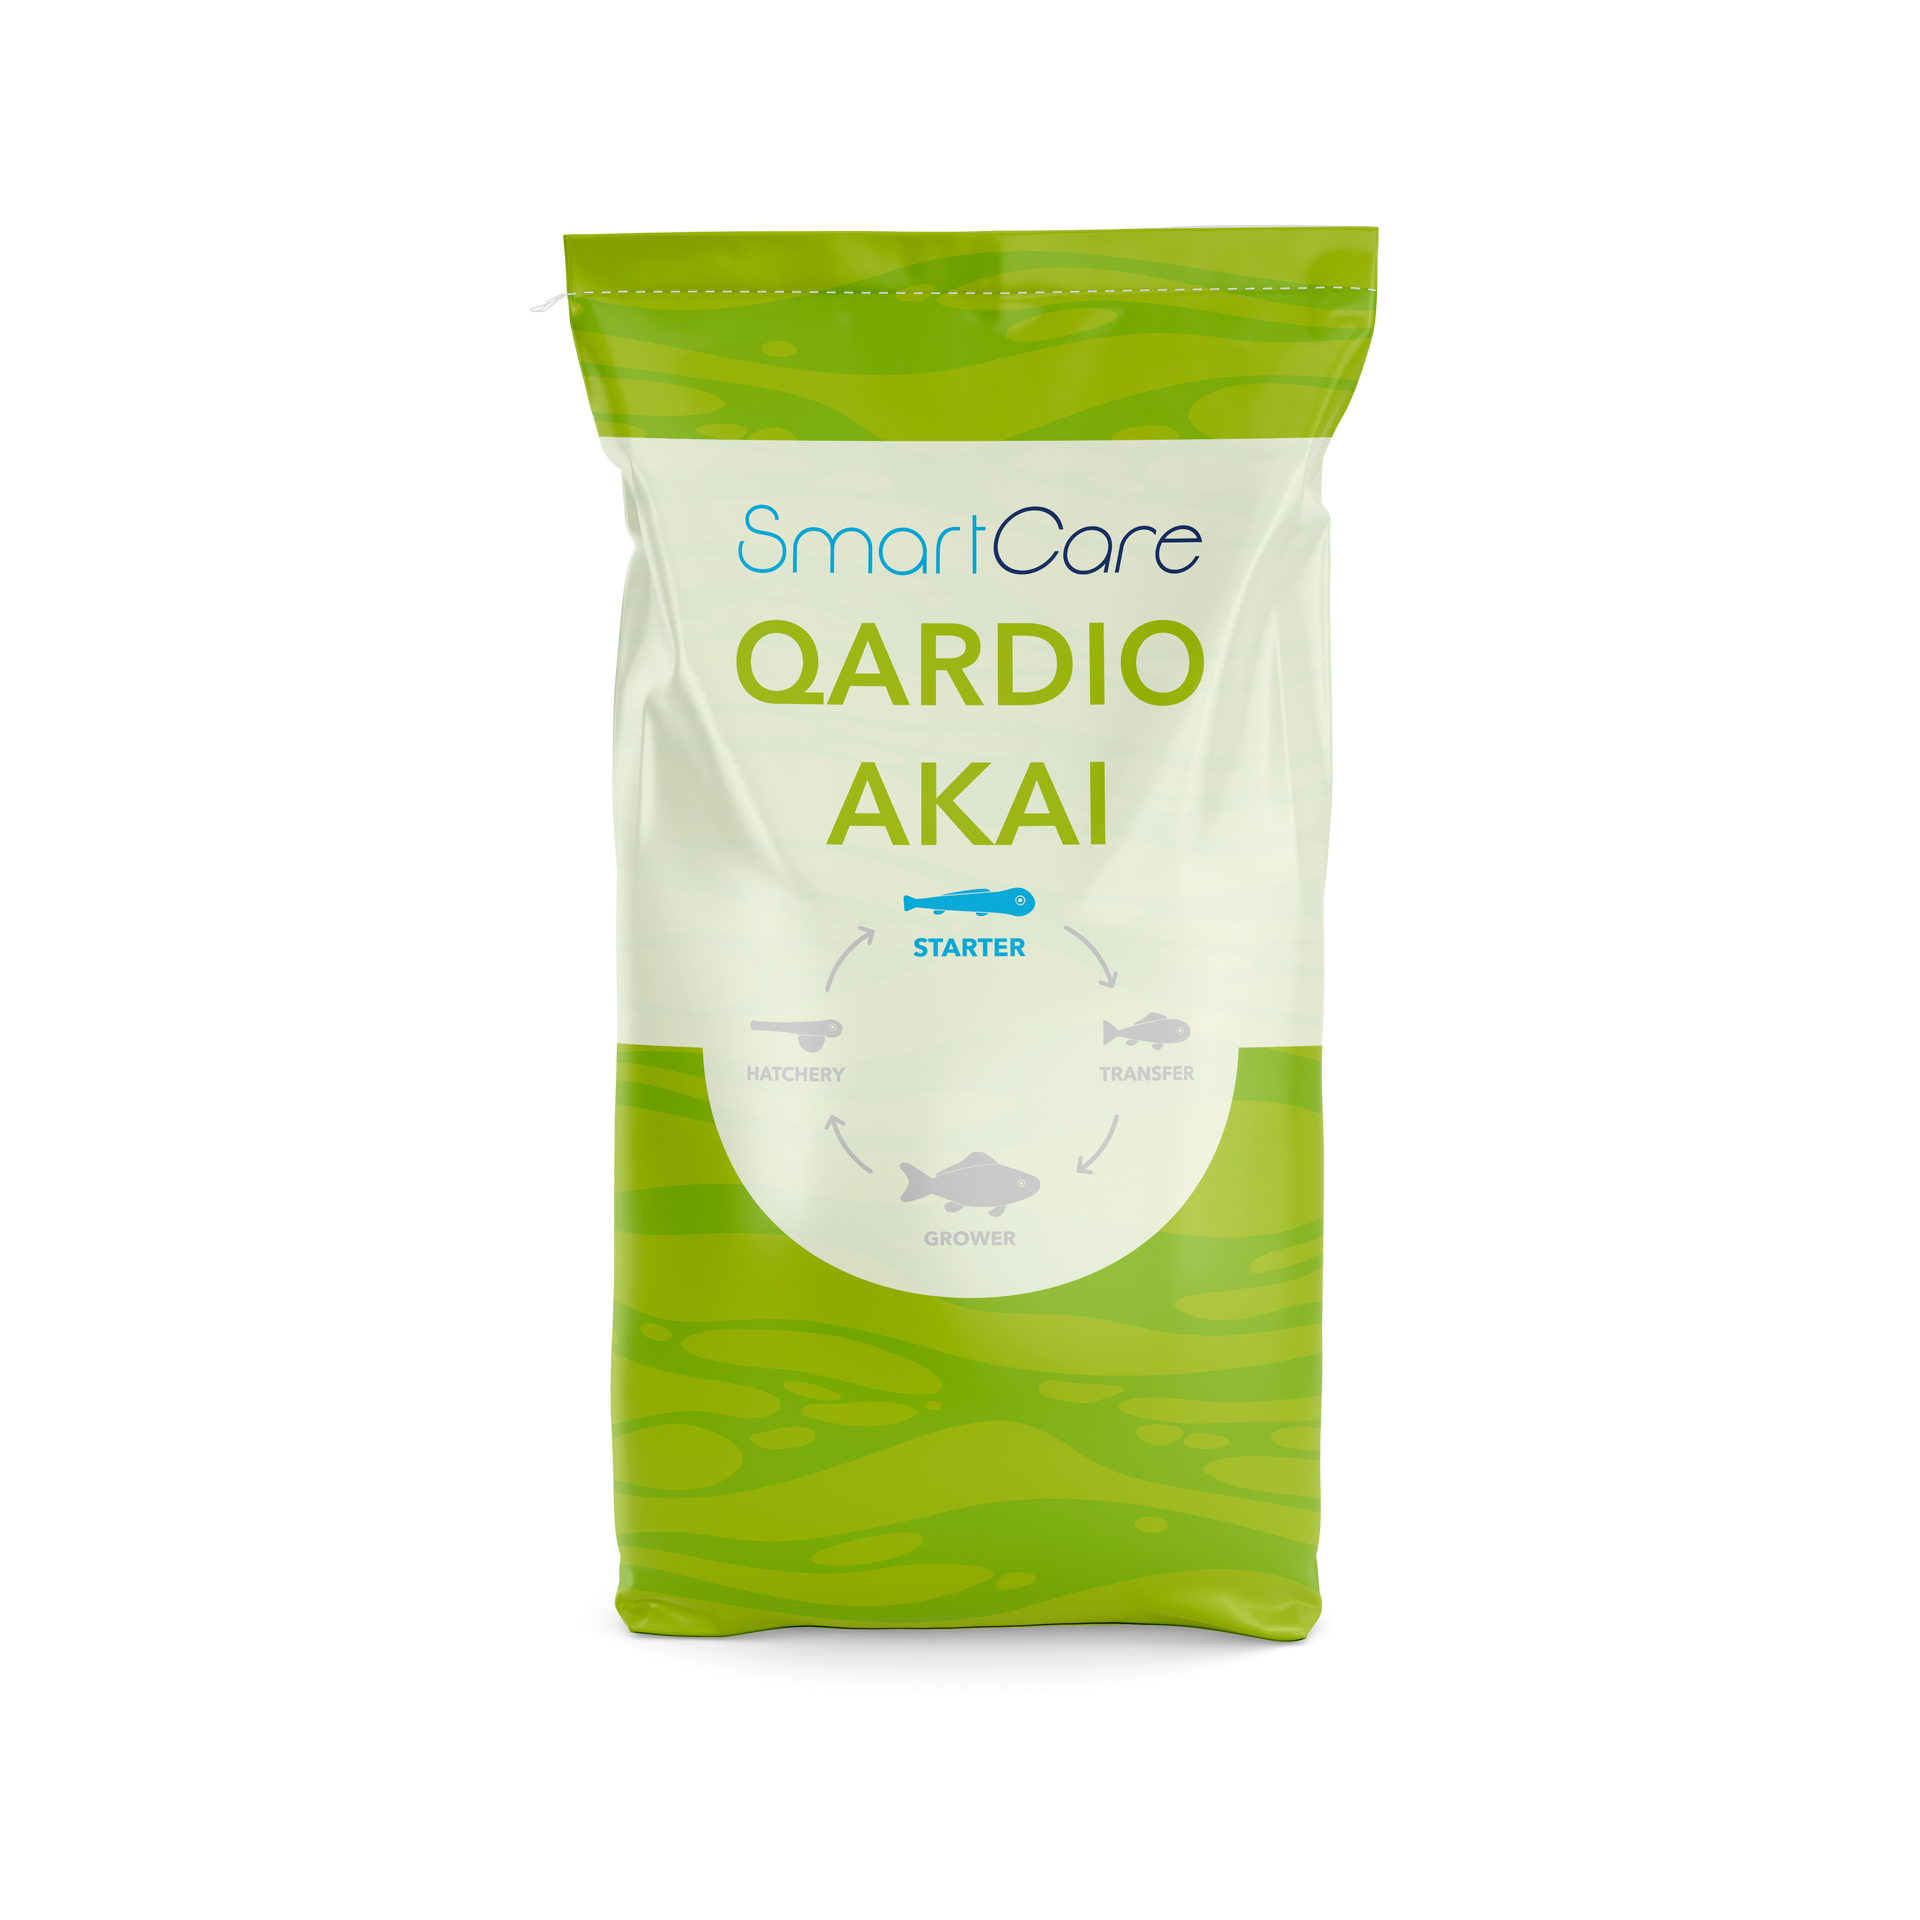 SmartCare Qardio Akai health feed for coho salmon